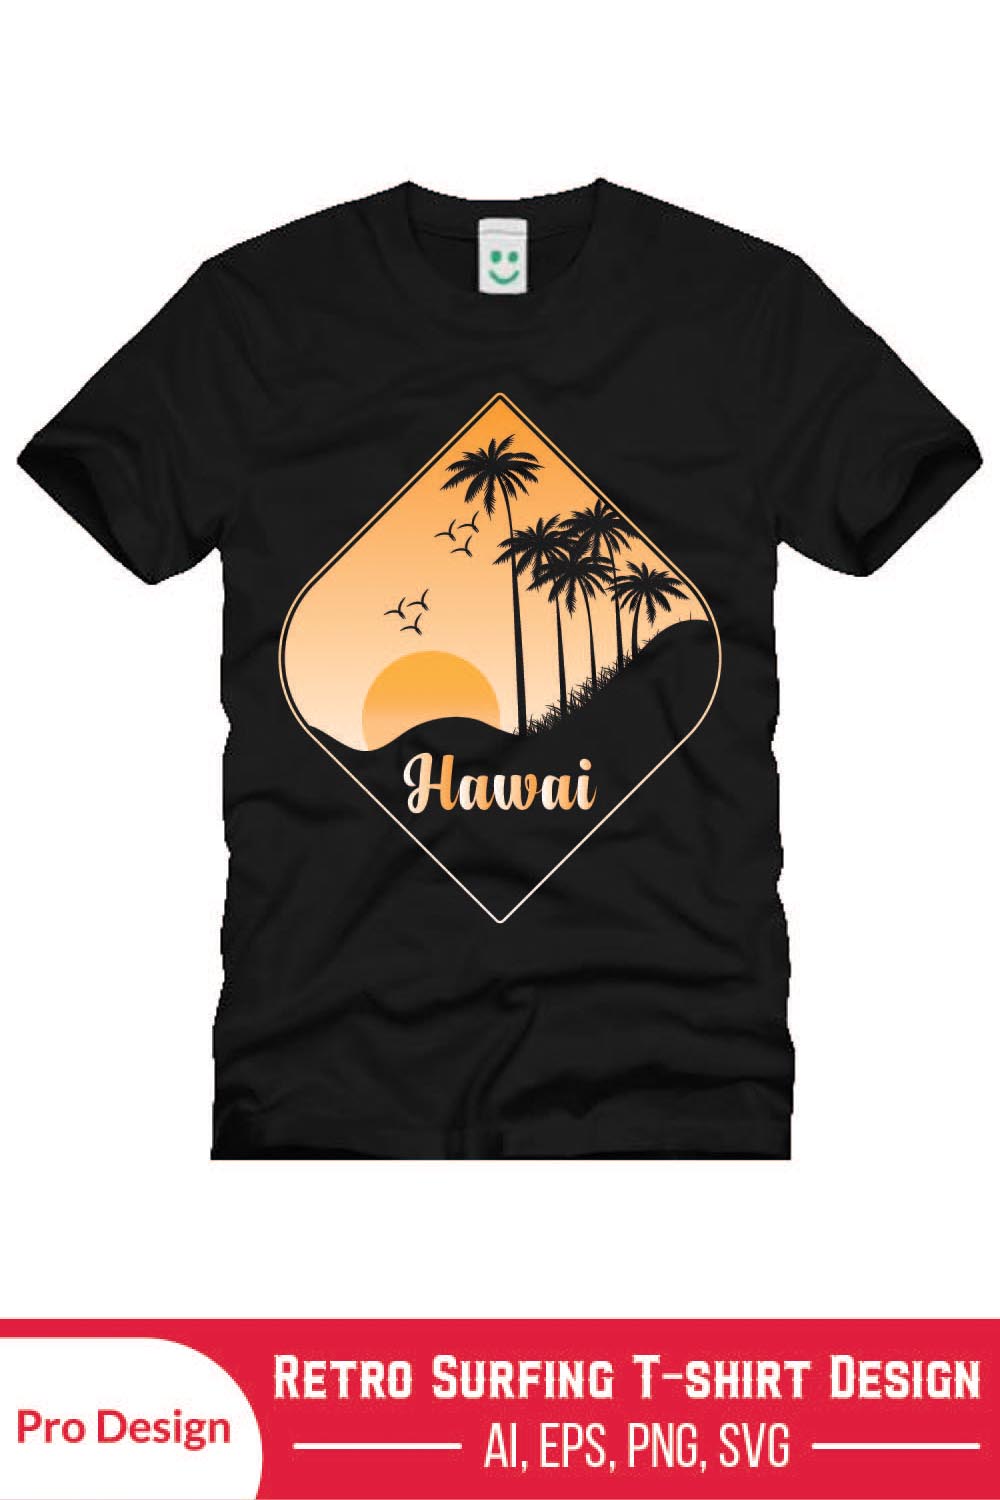 Summer T-Shirts Design| Surfing T-Shirts Design| Retro Vantage T-Shirts Design| pinterest preview image.